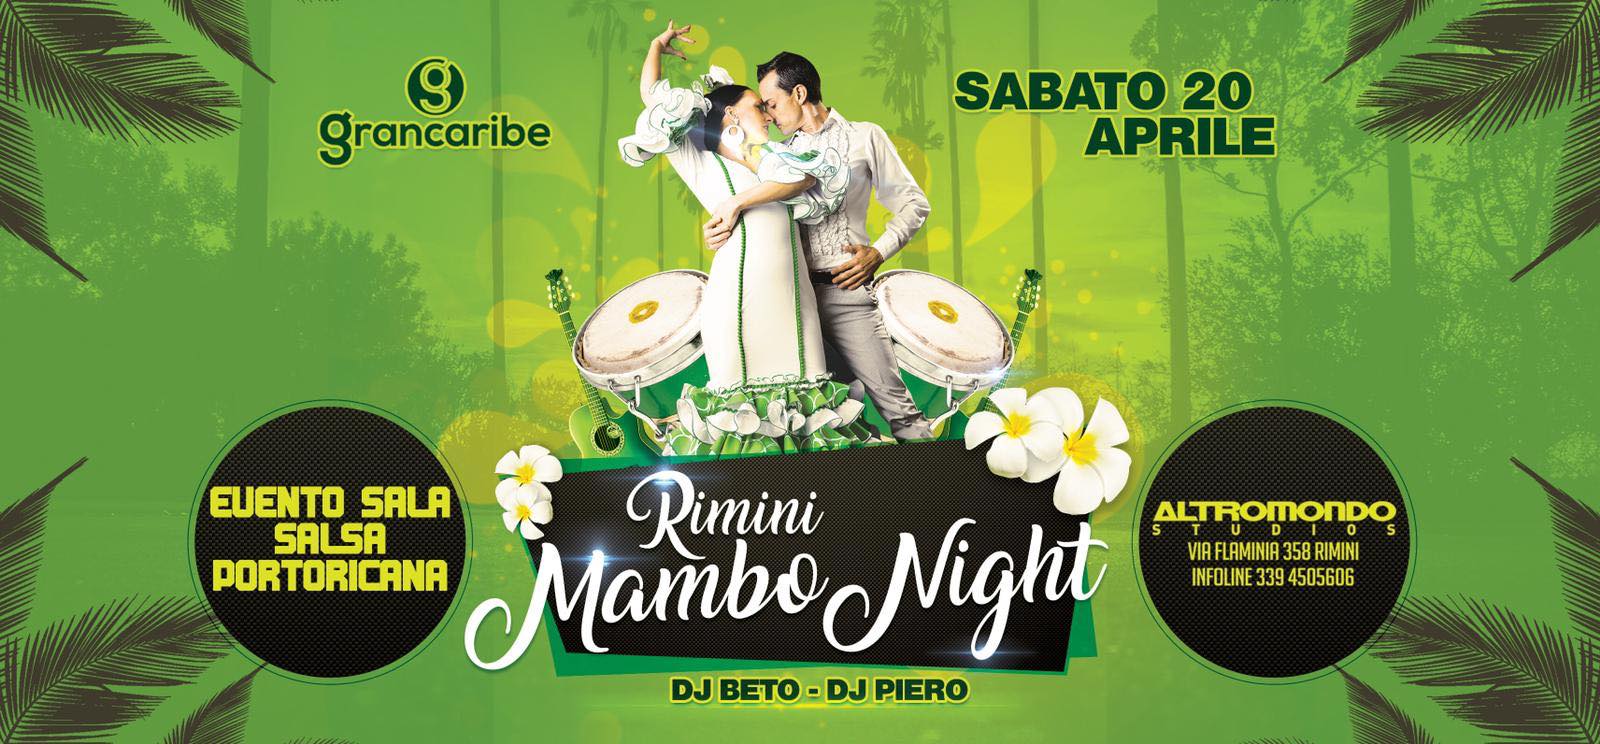 Rimini Mambo Night Discoteca Altromondo Studios